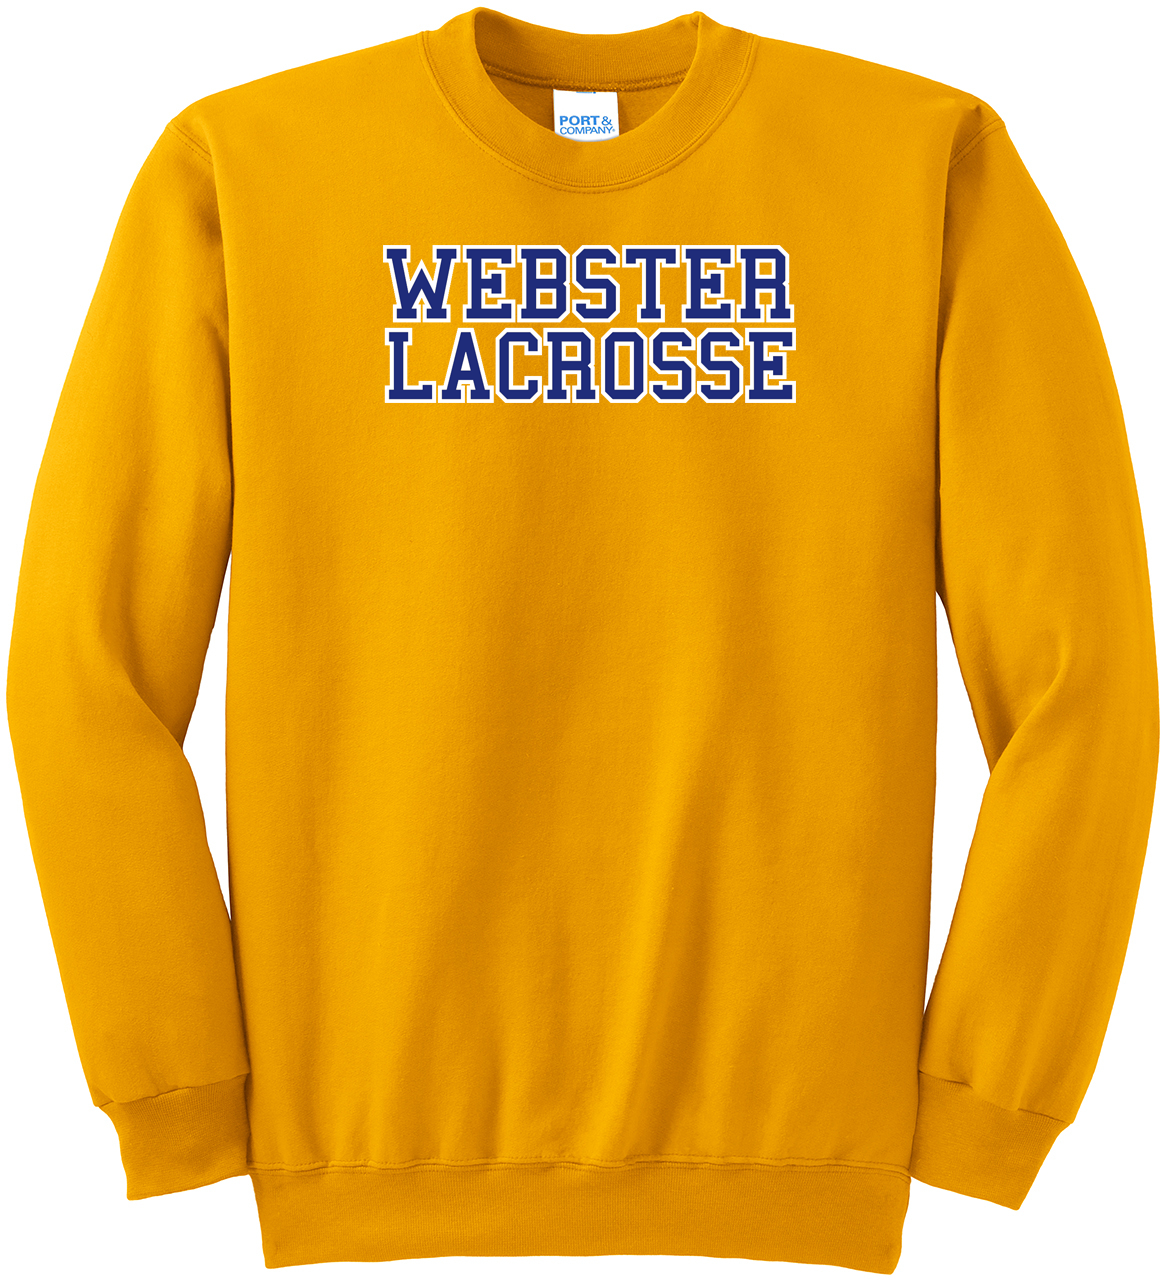 Webster Lacrosse Gold Crew Neck Sweater